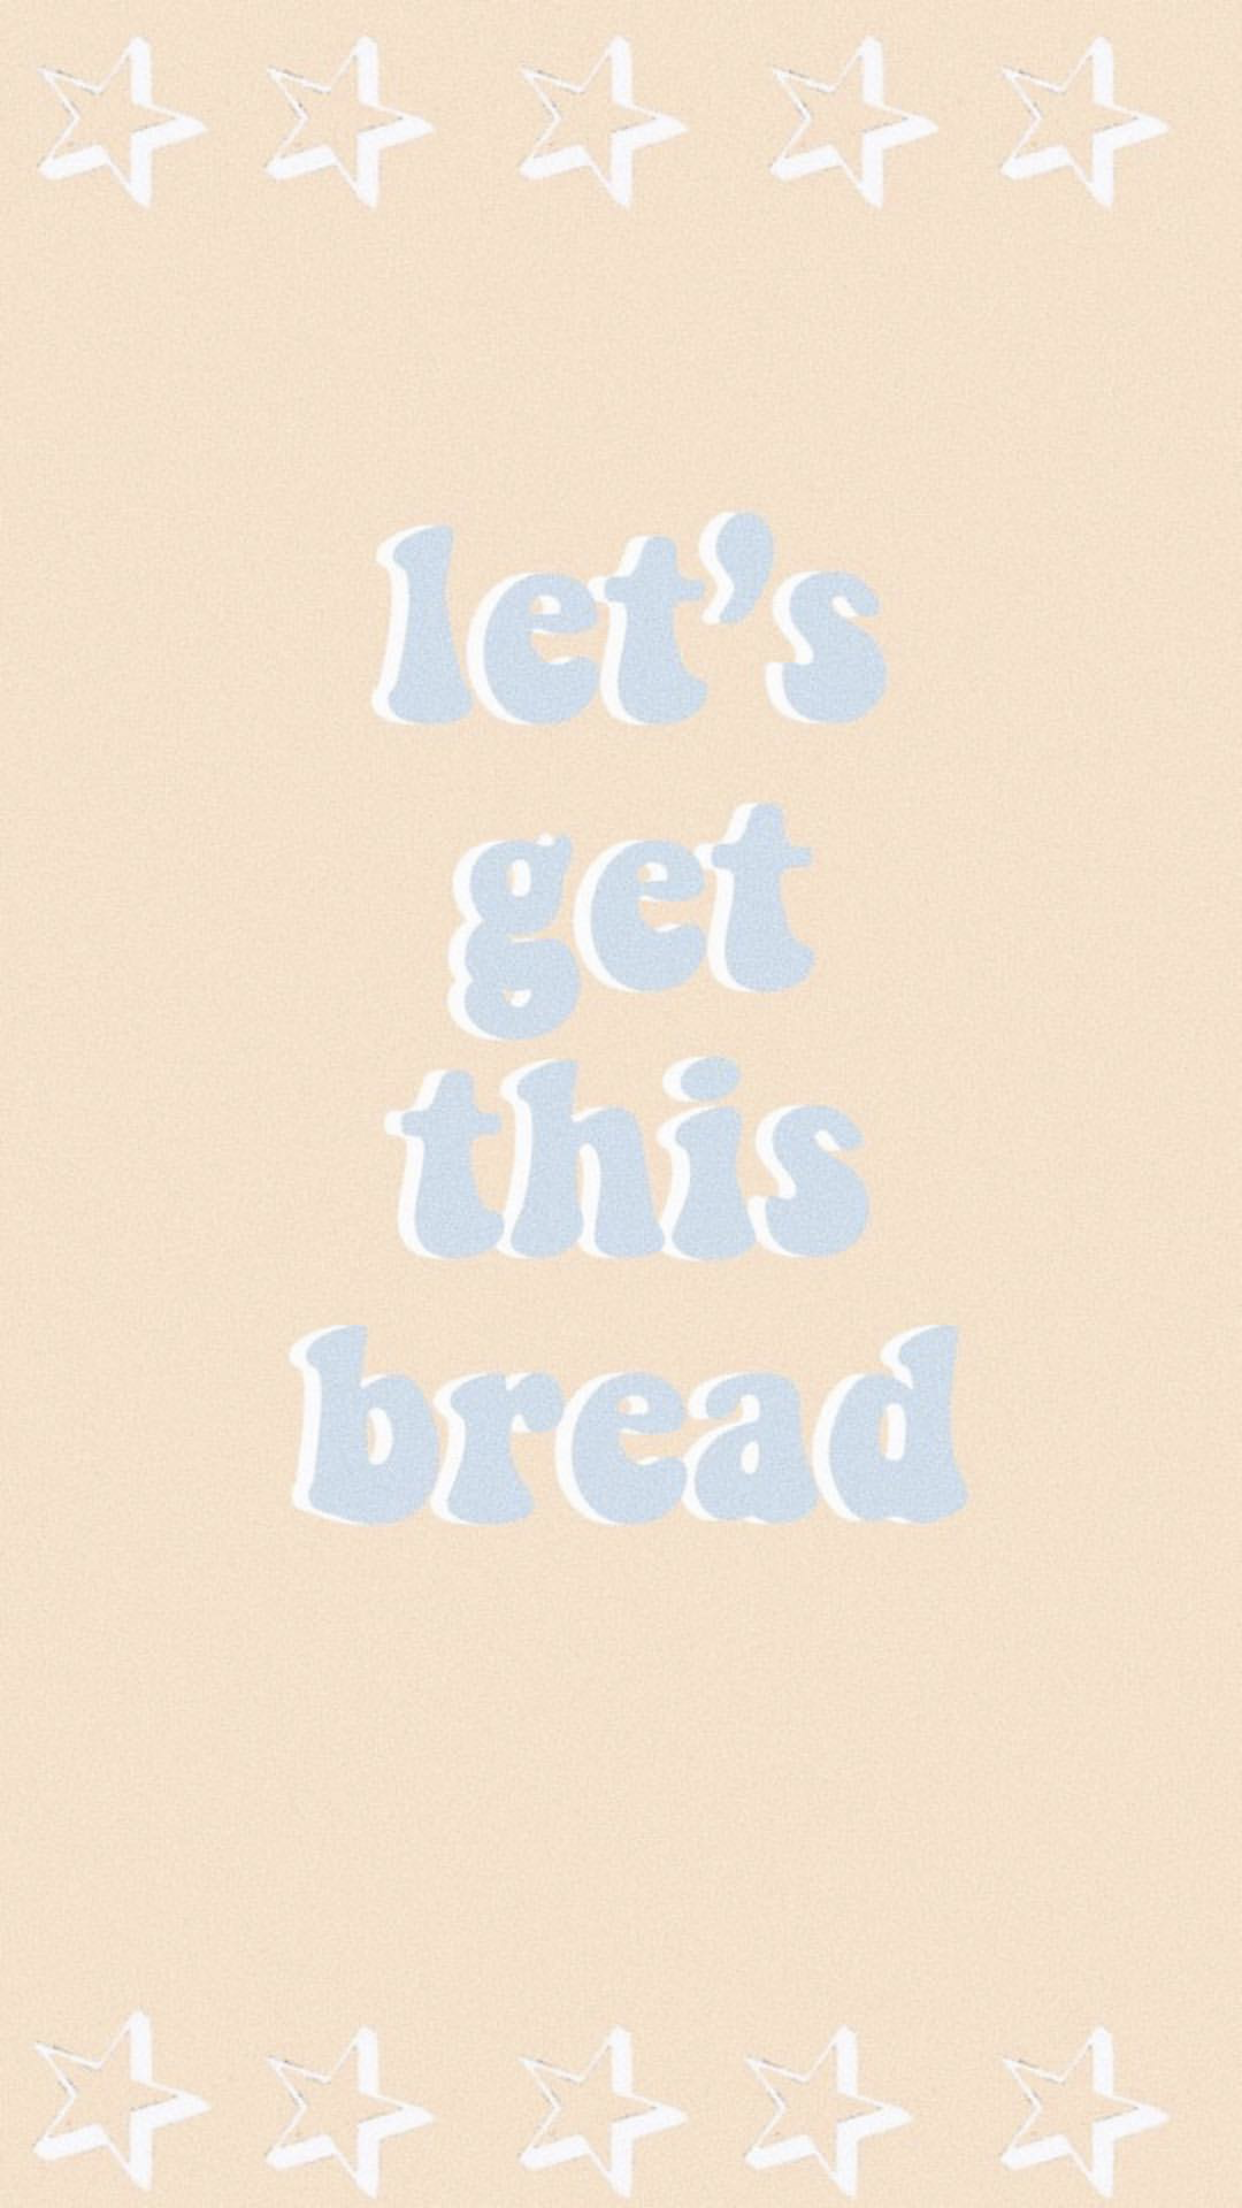 let's get this bread wallpaper. Words wallpaper, Aesthetic iphone wallpaper, Wallpaper quotes